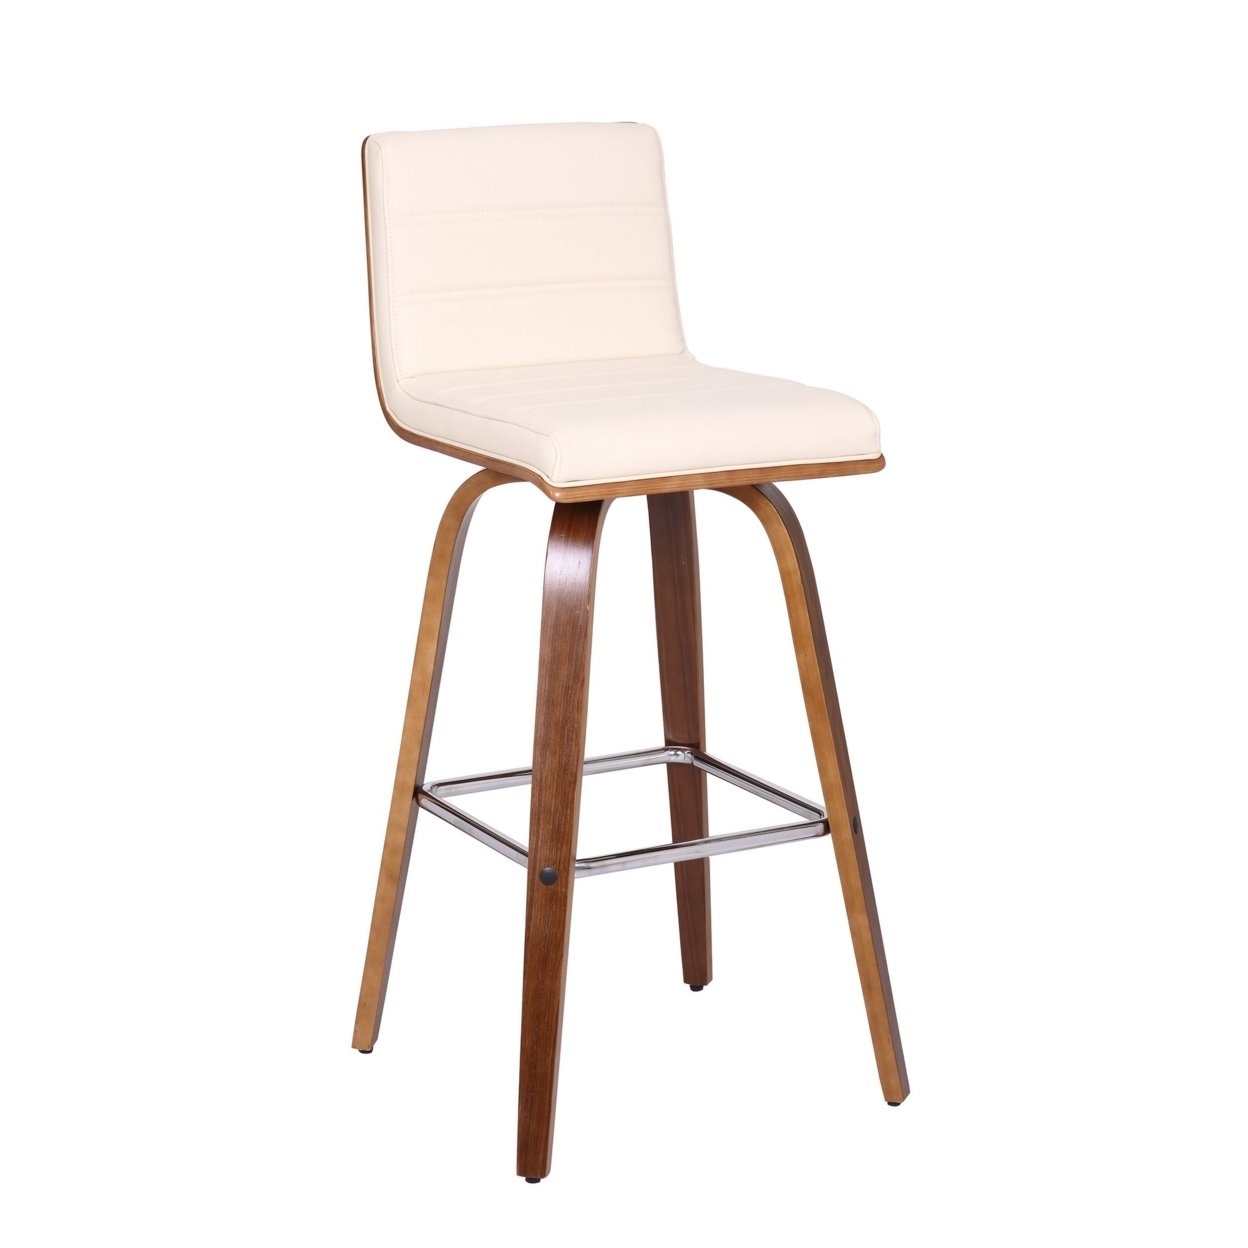 Leatherette Sloped Seat Barstool With Angled Legs, Cream- Saltoro Sherpi